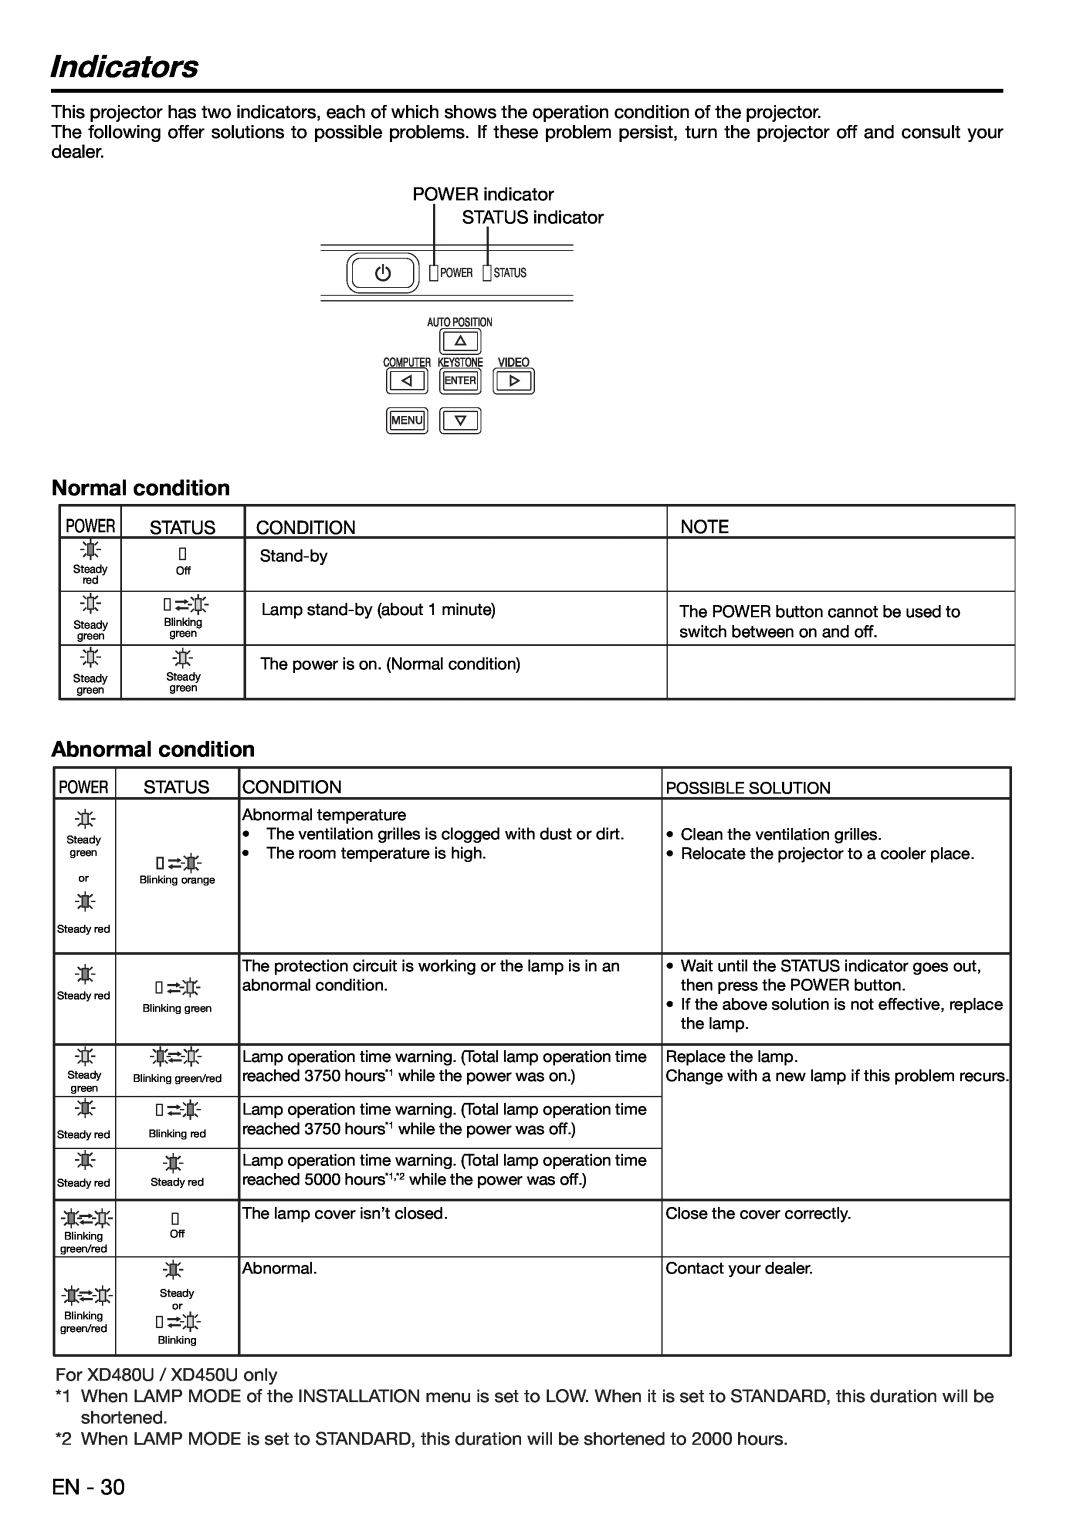 Mitsubishi Electronics XD480U user manual Indicators, Normal condition, Abnormal condition, Status, Condition 